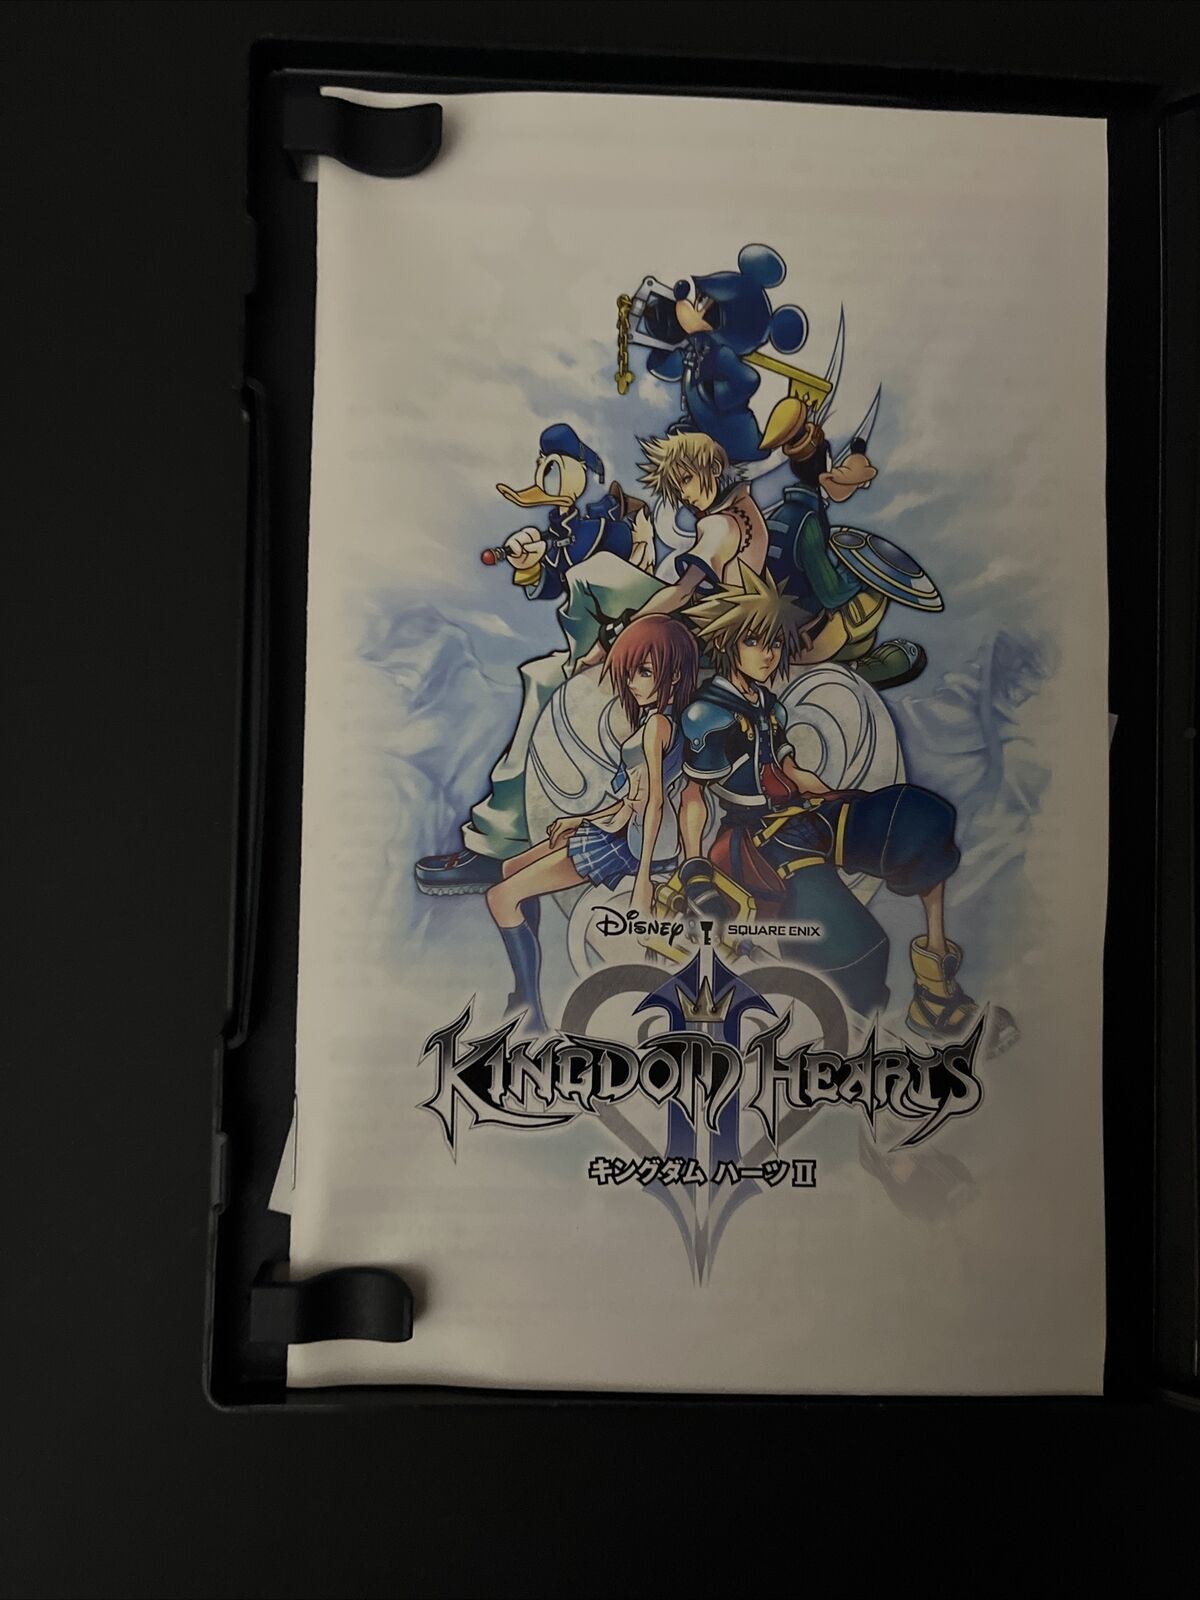 Kingdom Hearts 1 & 2 - PlayStation PS2 NTSC-J Japan Square Enix Action RPG Game